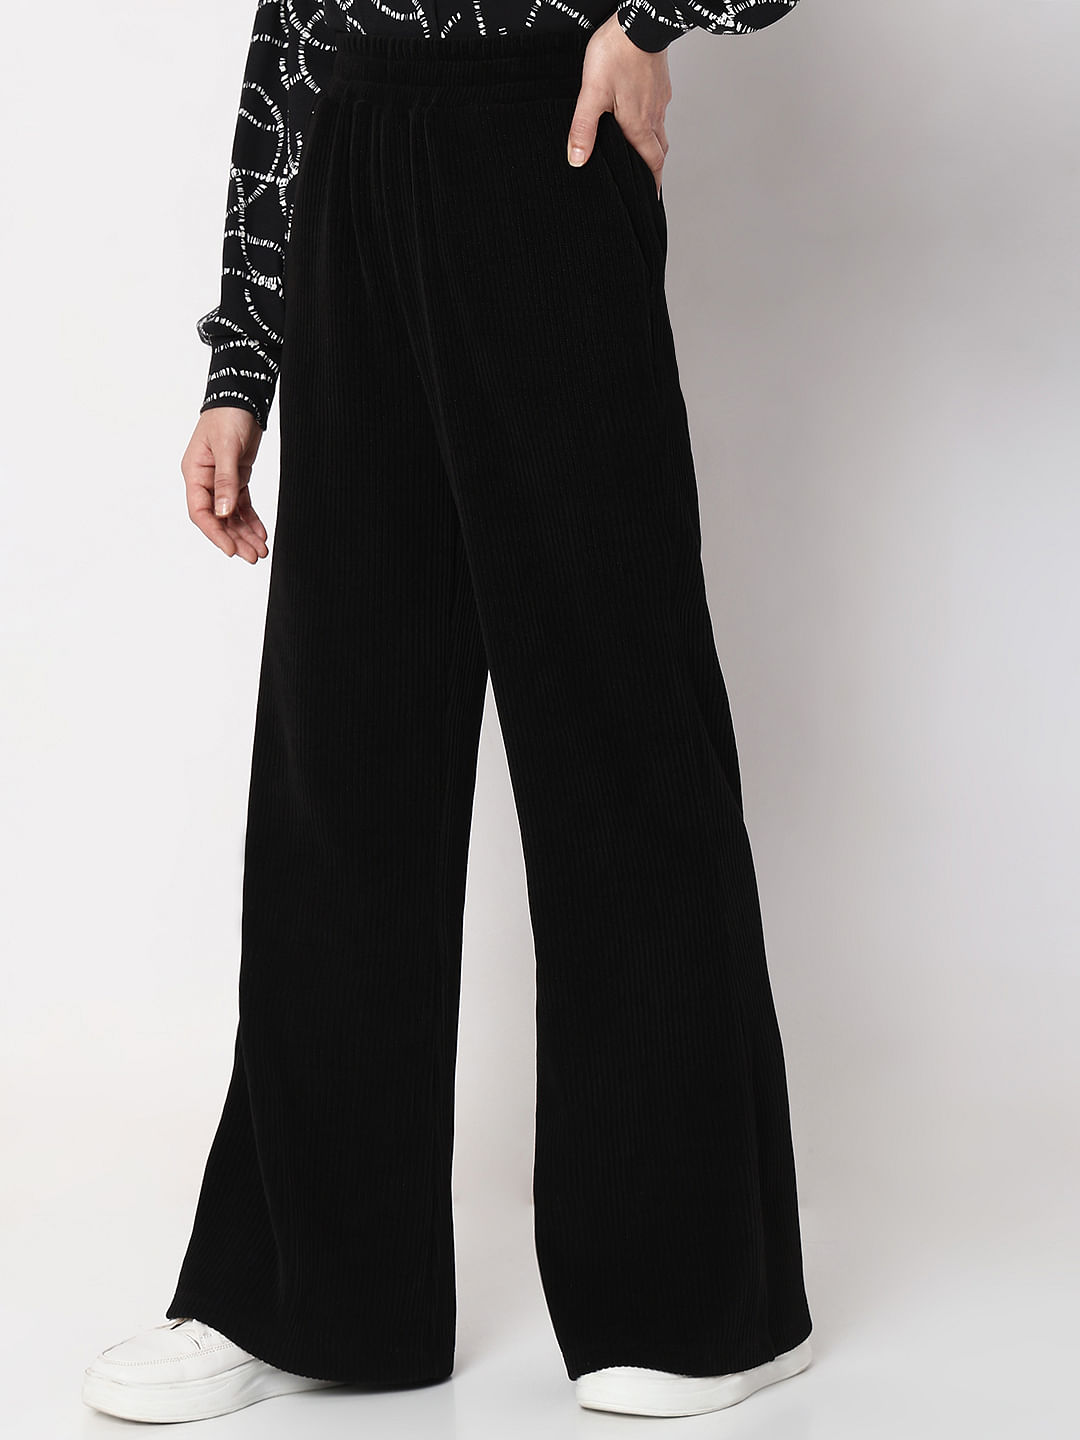 Maroon Cotton Trouser For Women | Solid Regular Fit | सादा /SAADAA